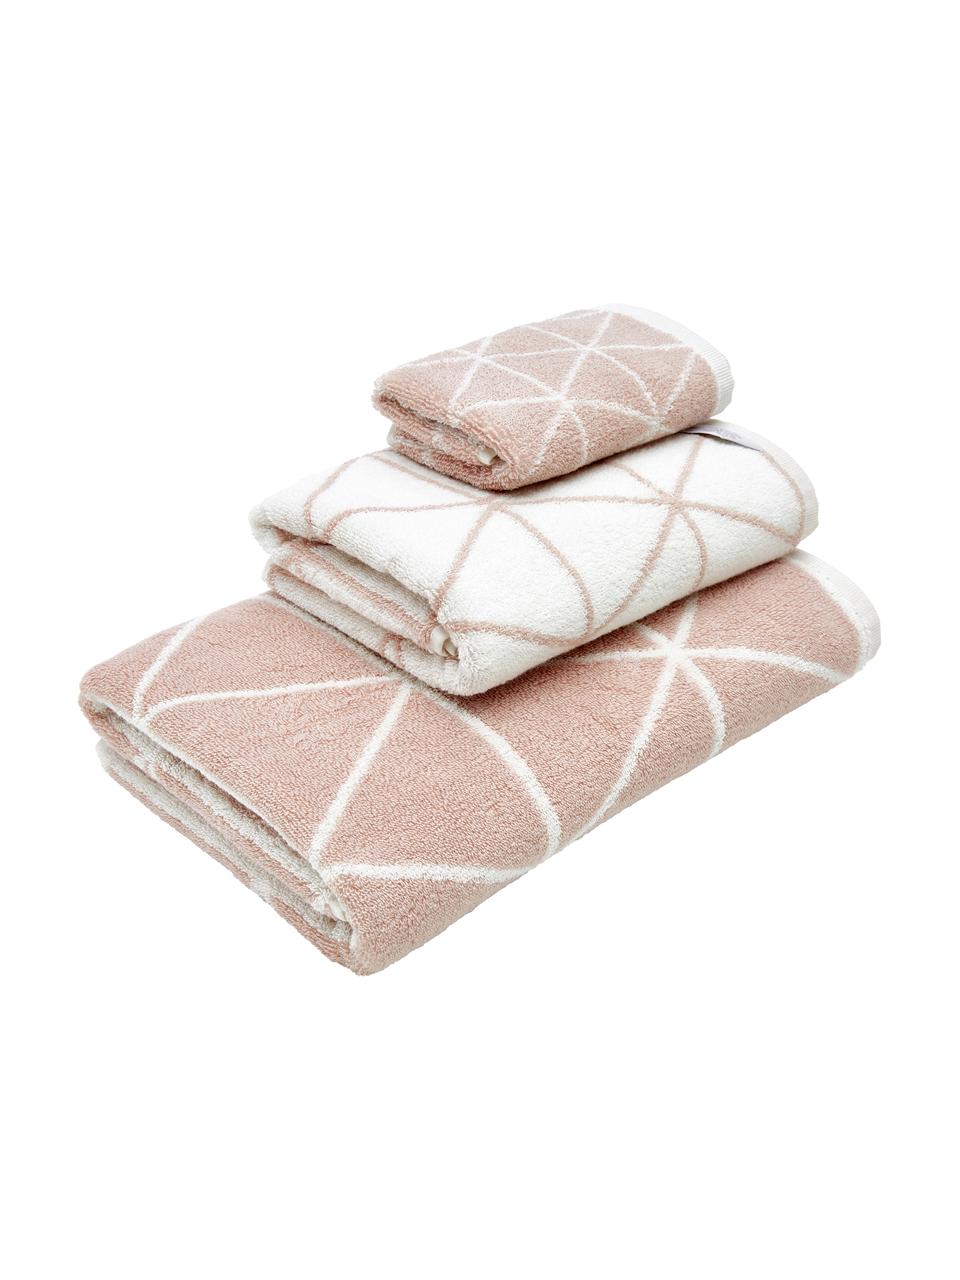 Set 3 asciugamani reversibili con motivo grafico Elina, Rosa, bianco crema, Set in varie misure